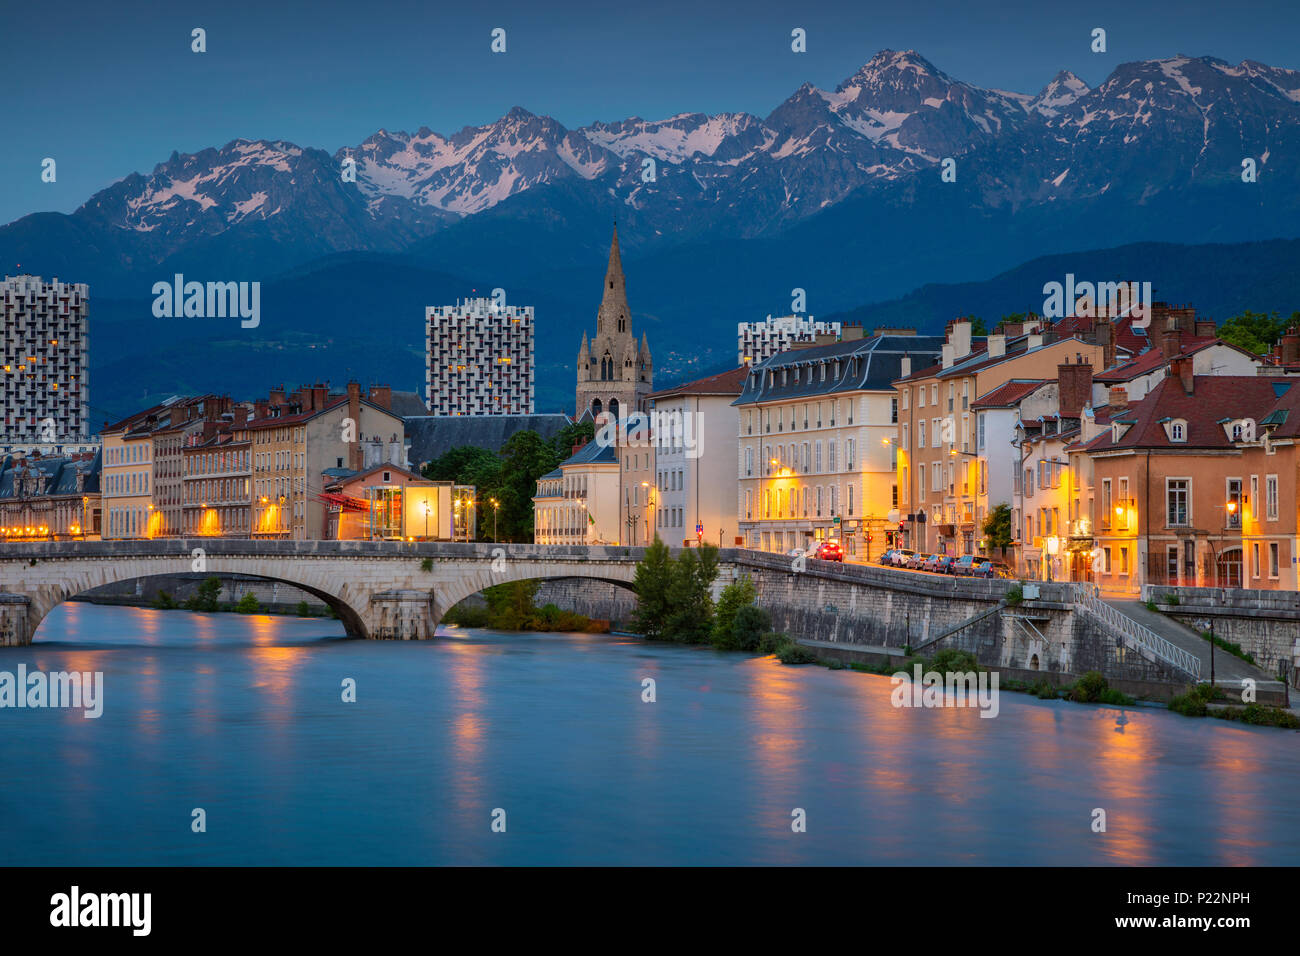 Grenoble. Cityscape image of Grenoble, France during twilight blue hour. Stock Photo